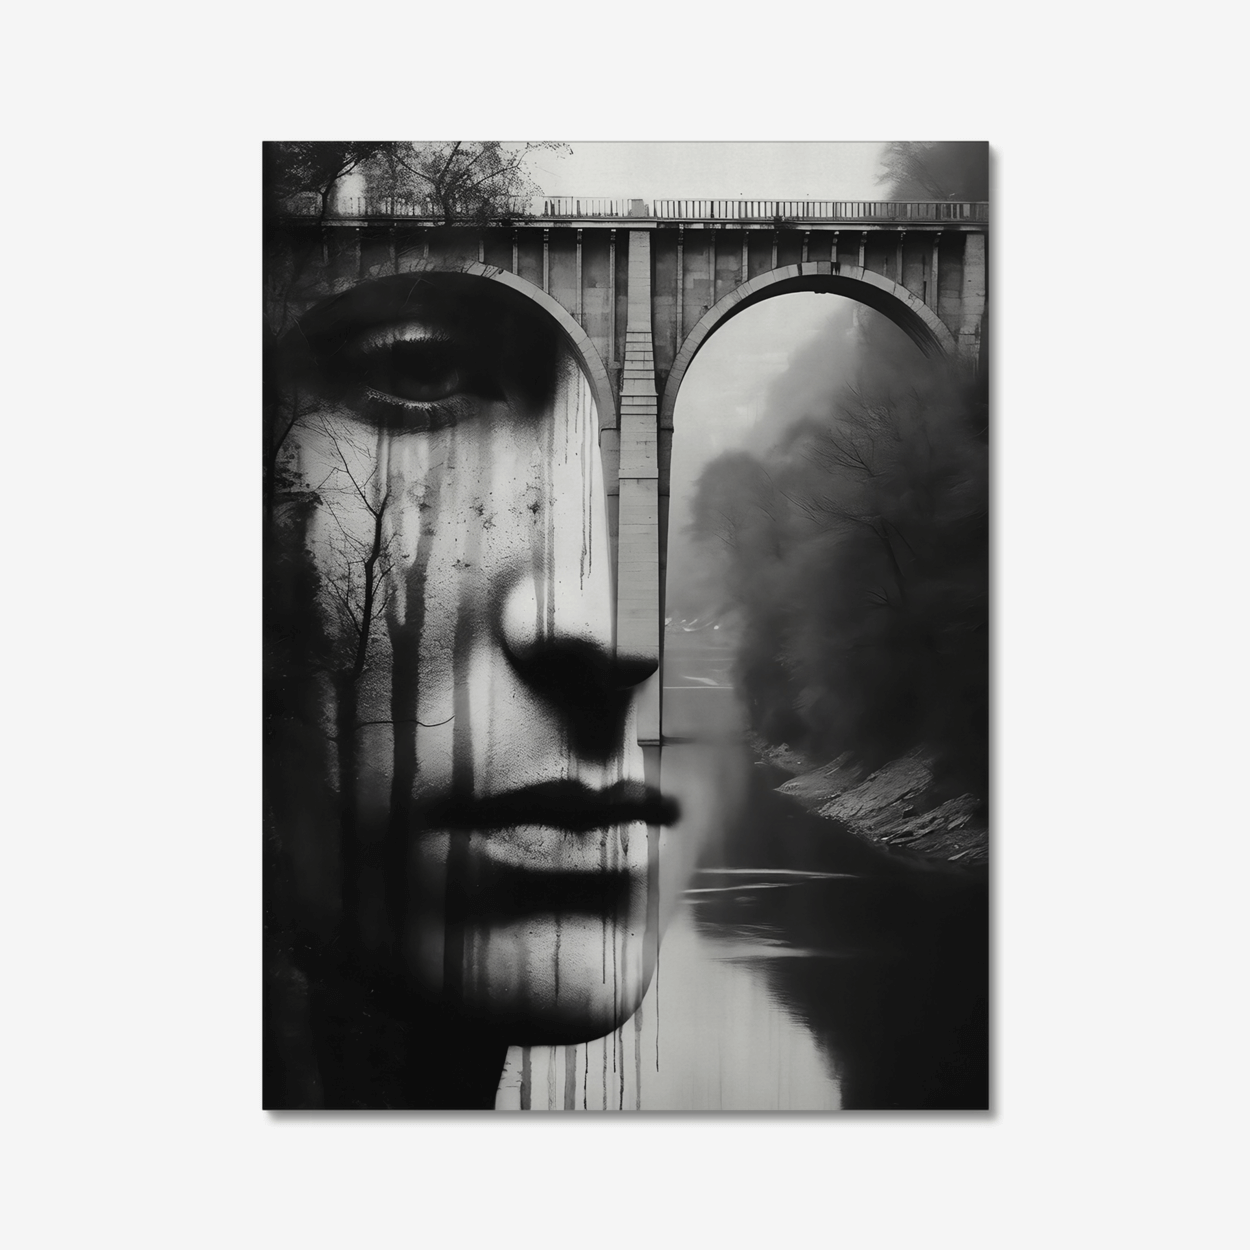 Face and bridge